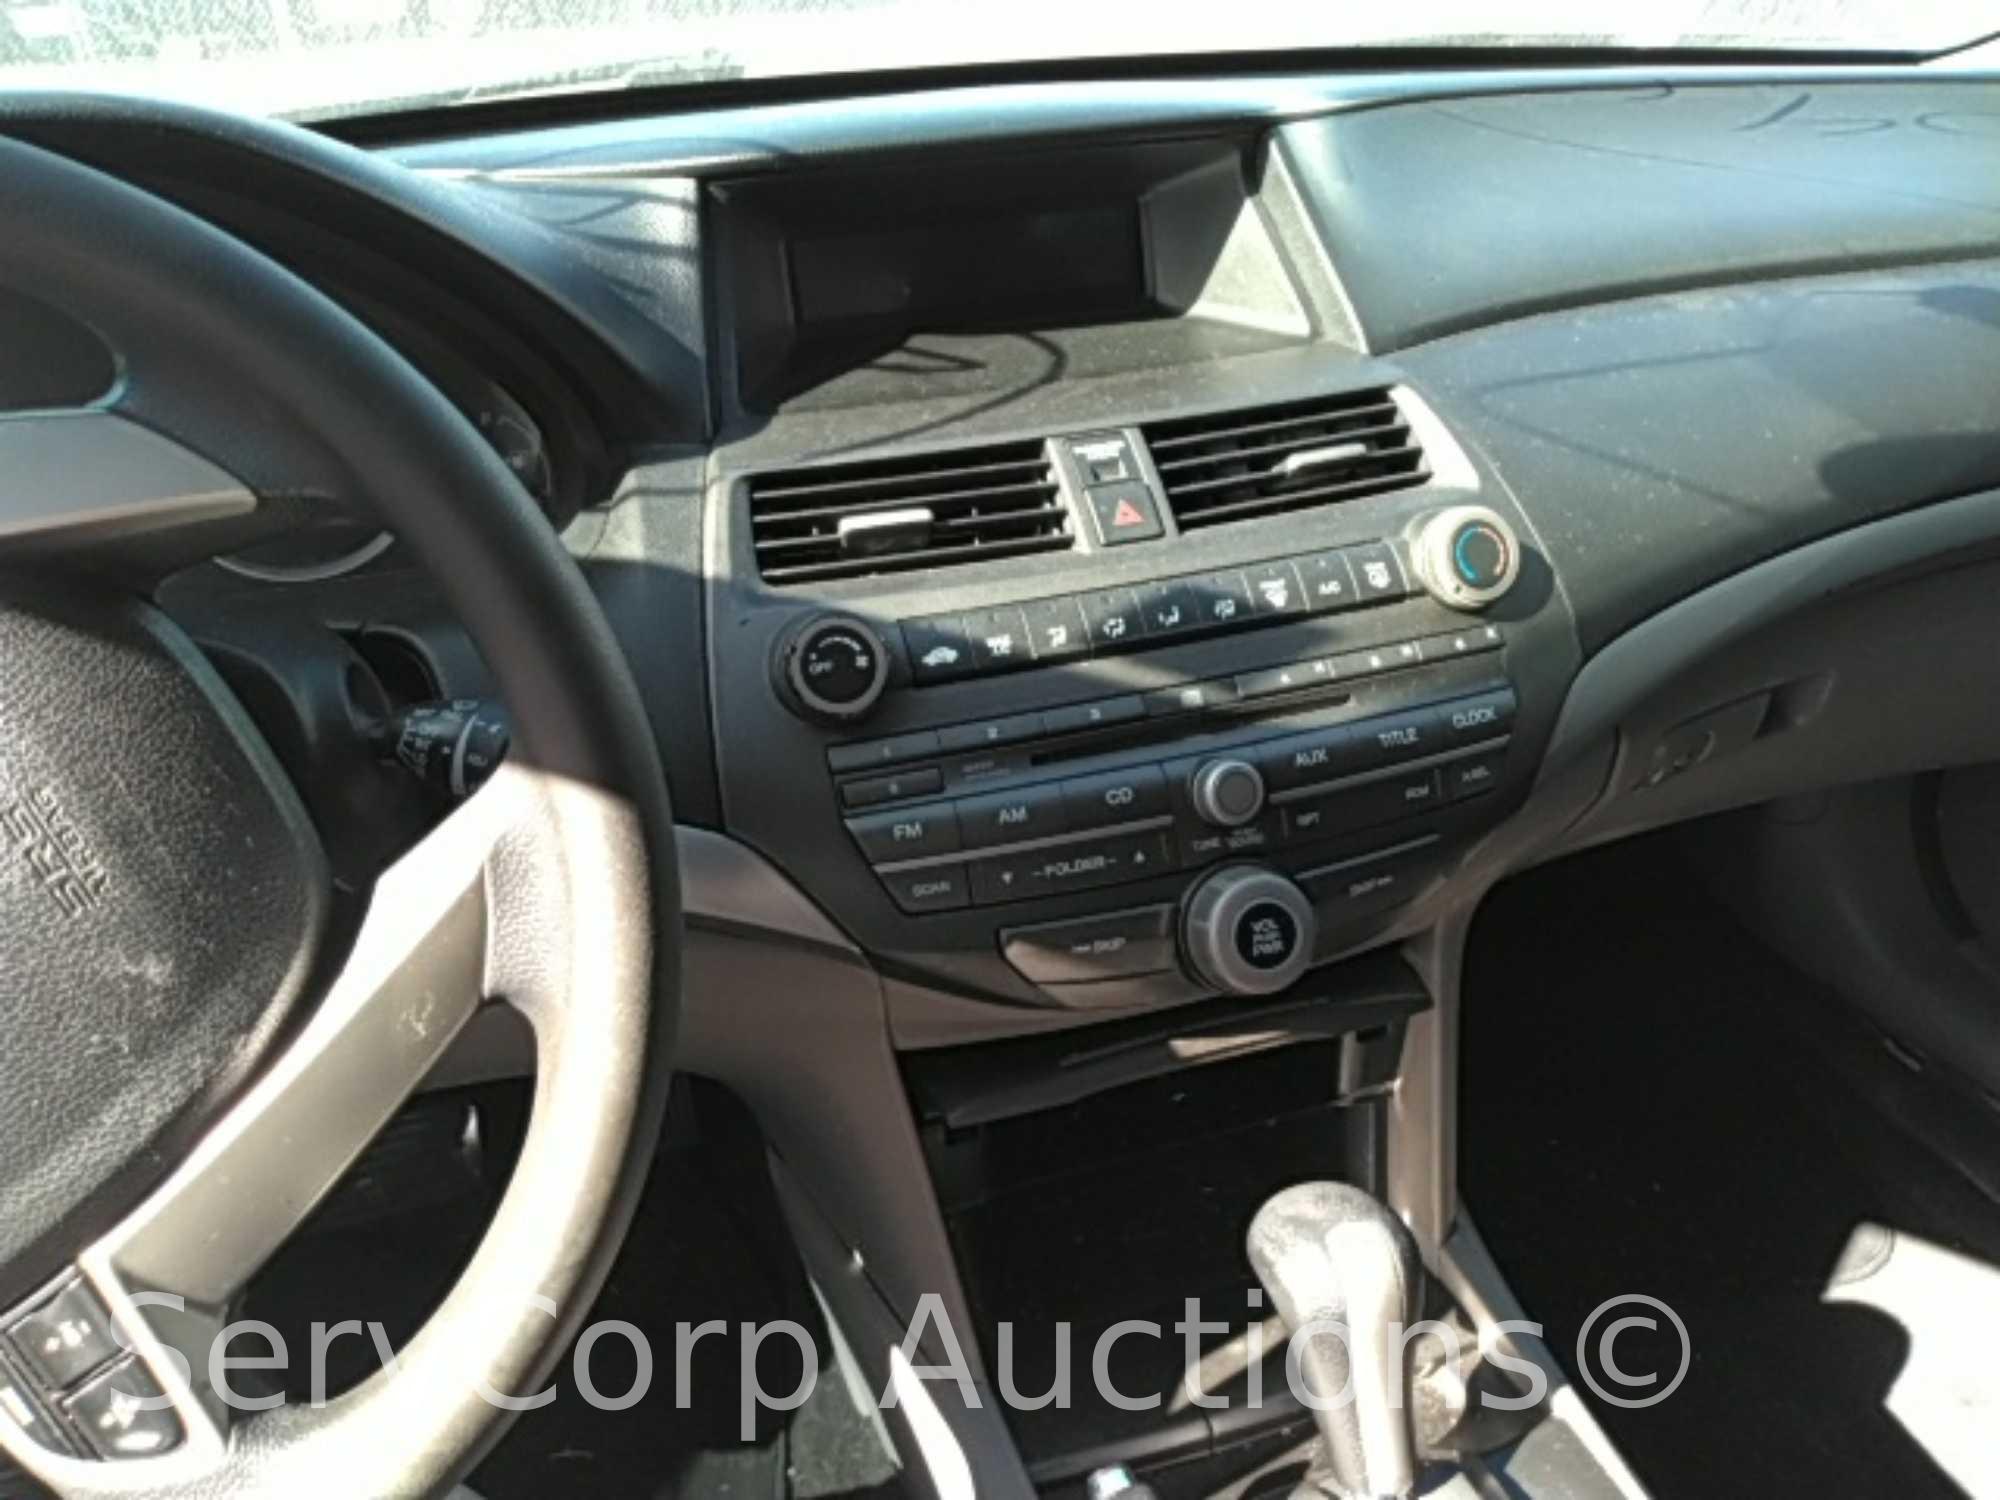 2011 Honda Accord Passenger Car, VIN # 1HGCP2F35BA071151